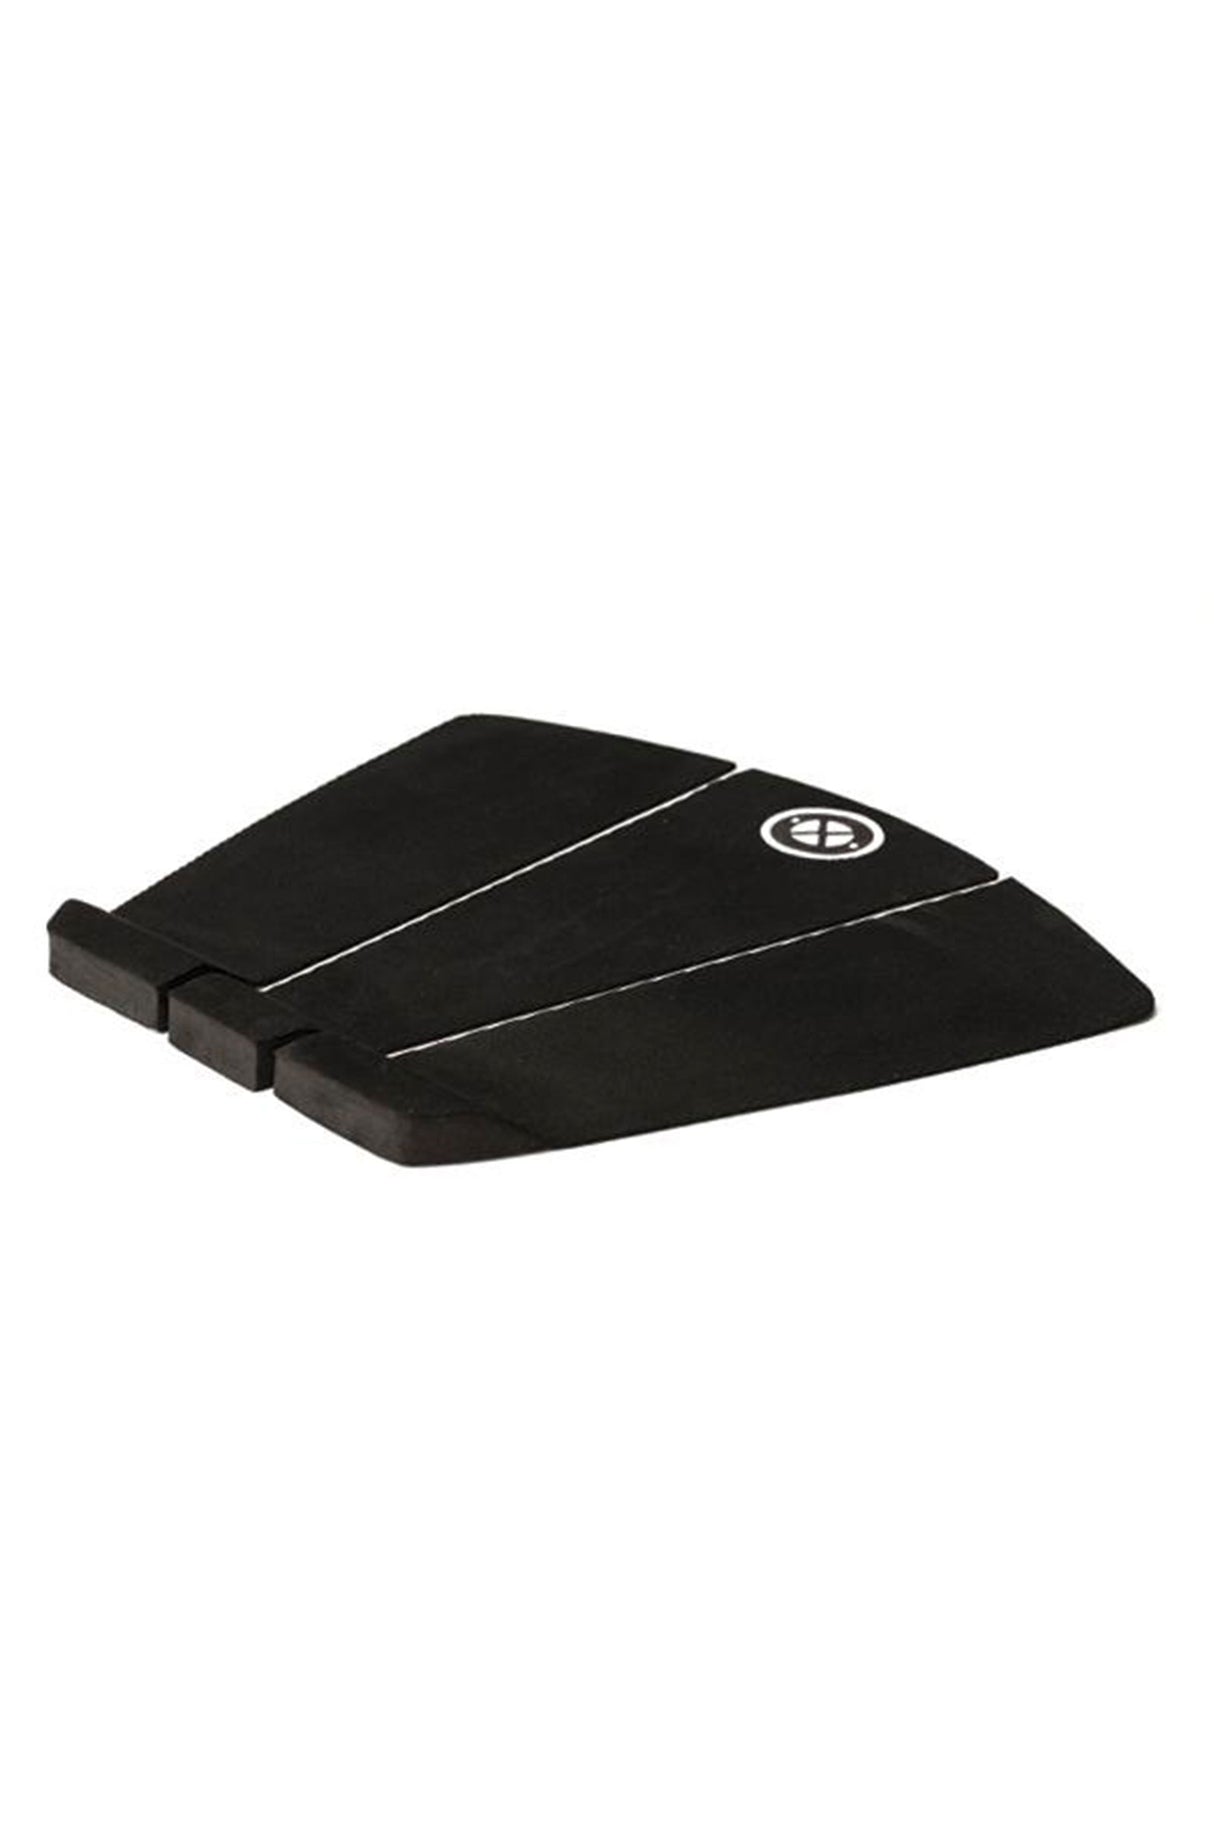 Dreded Grip 3PC Micro Tail Pad - Black